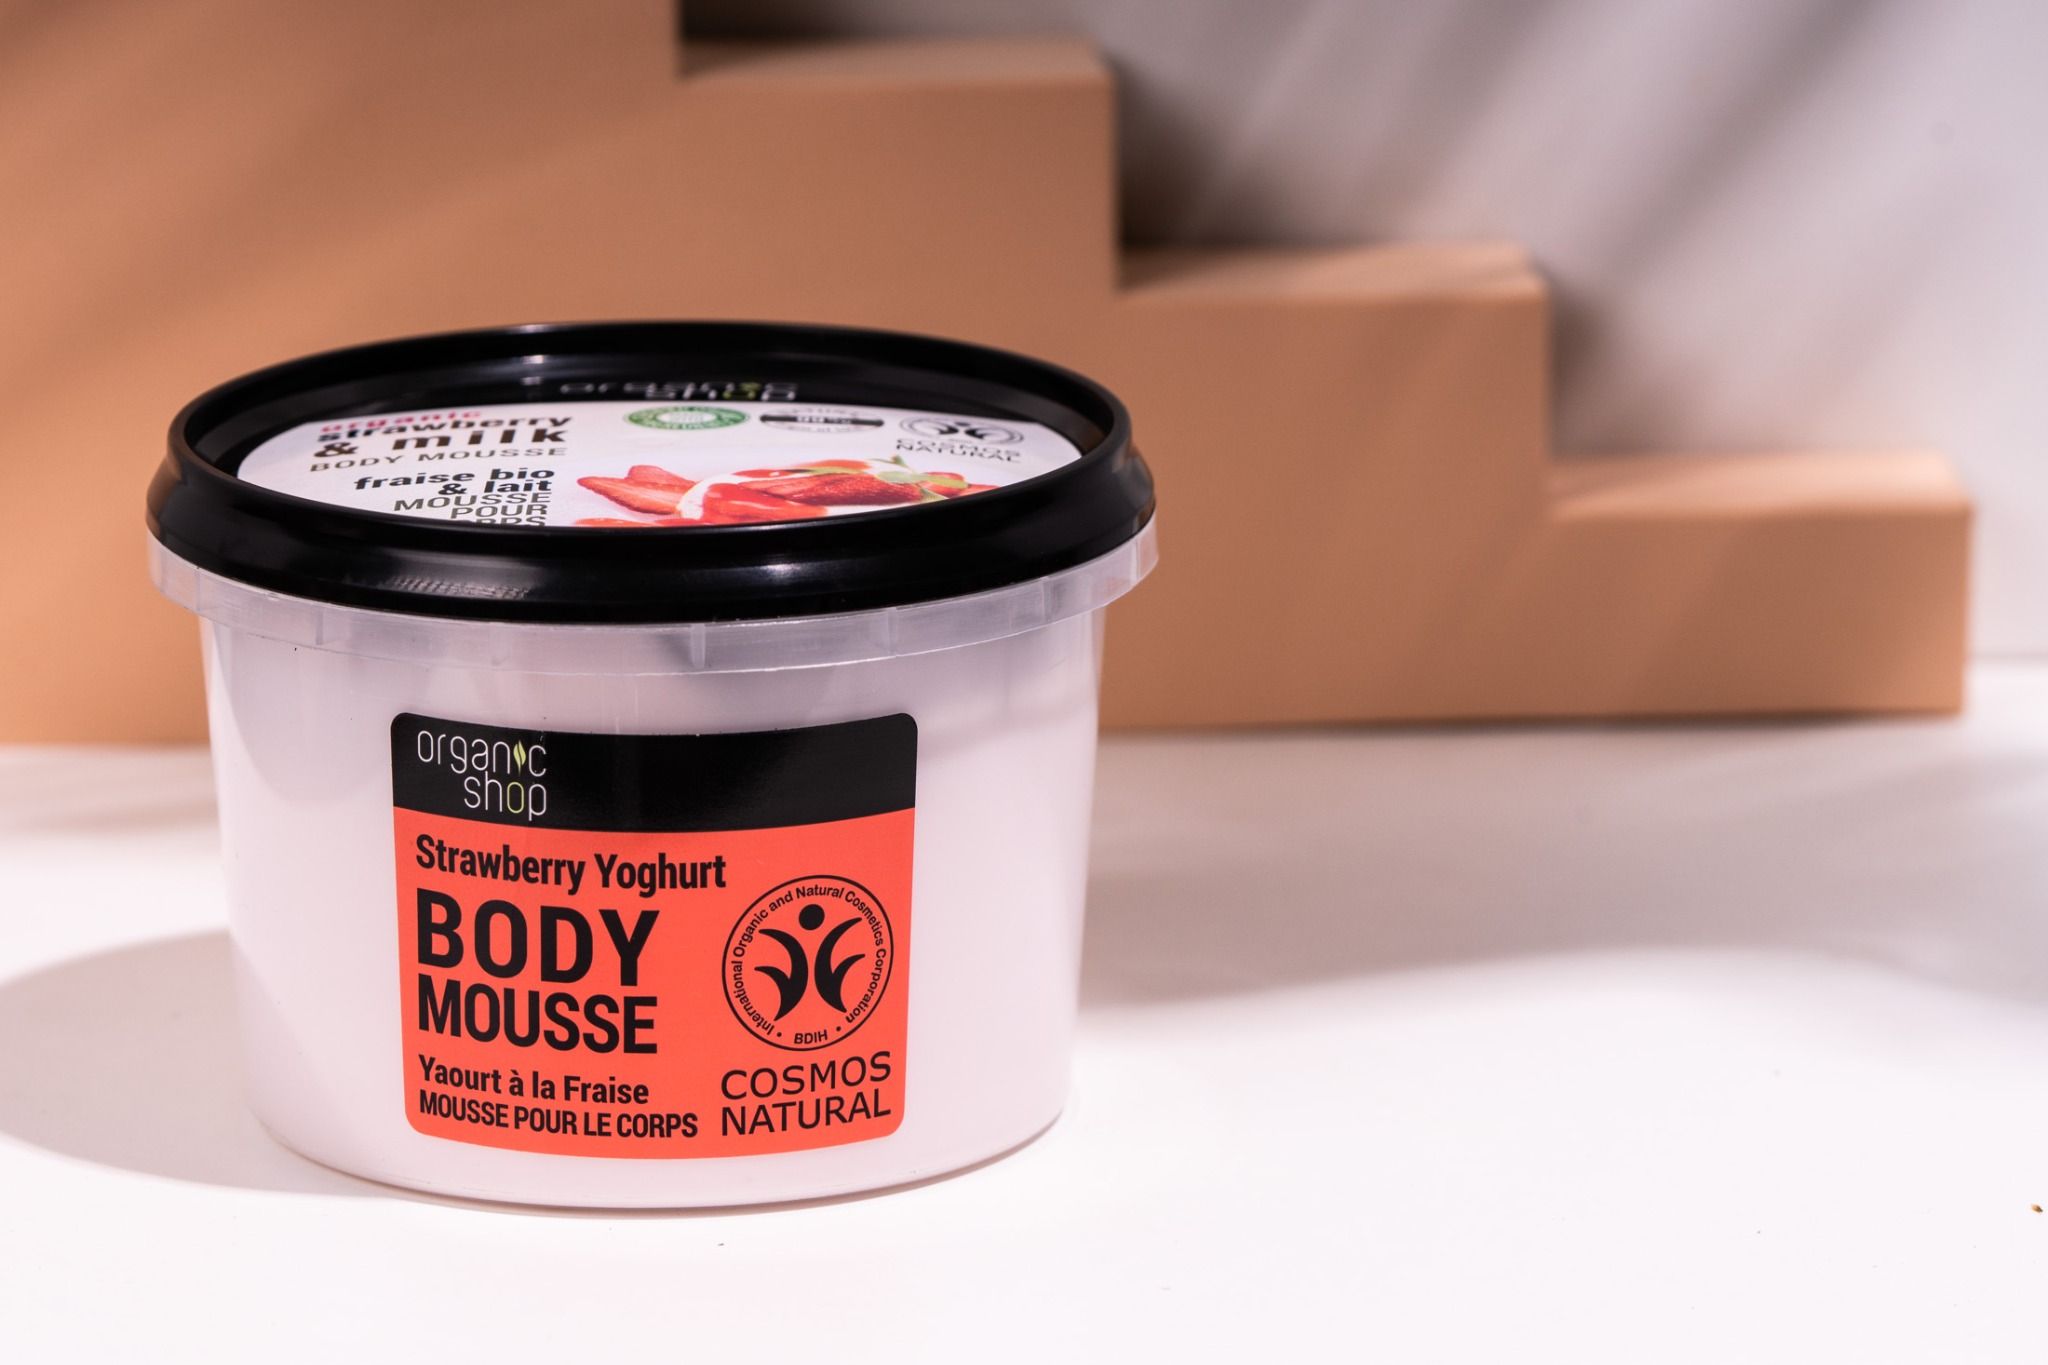  Organic Shop Body Mousse Strawberry Yoghurt 